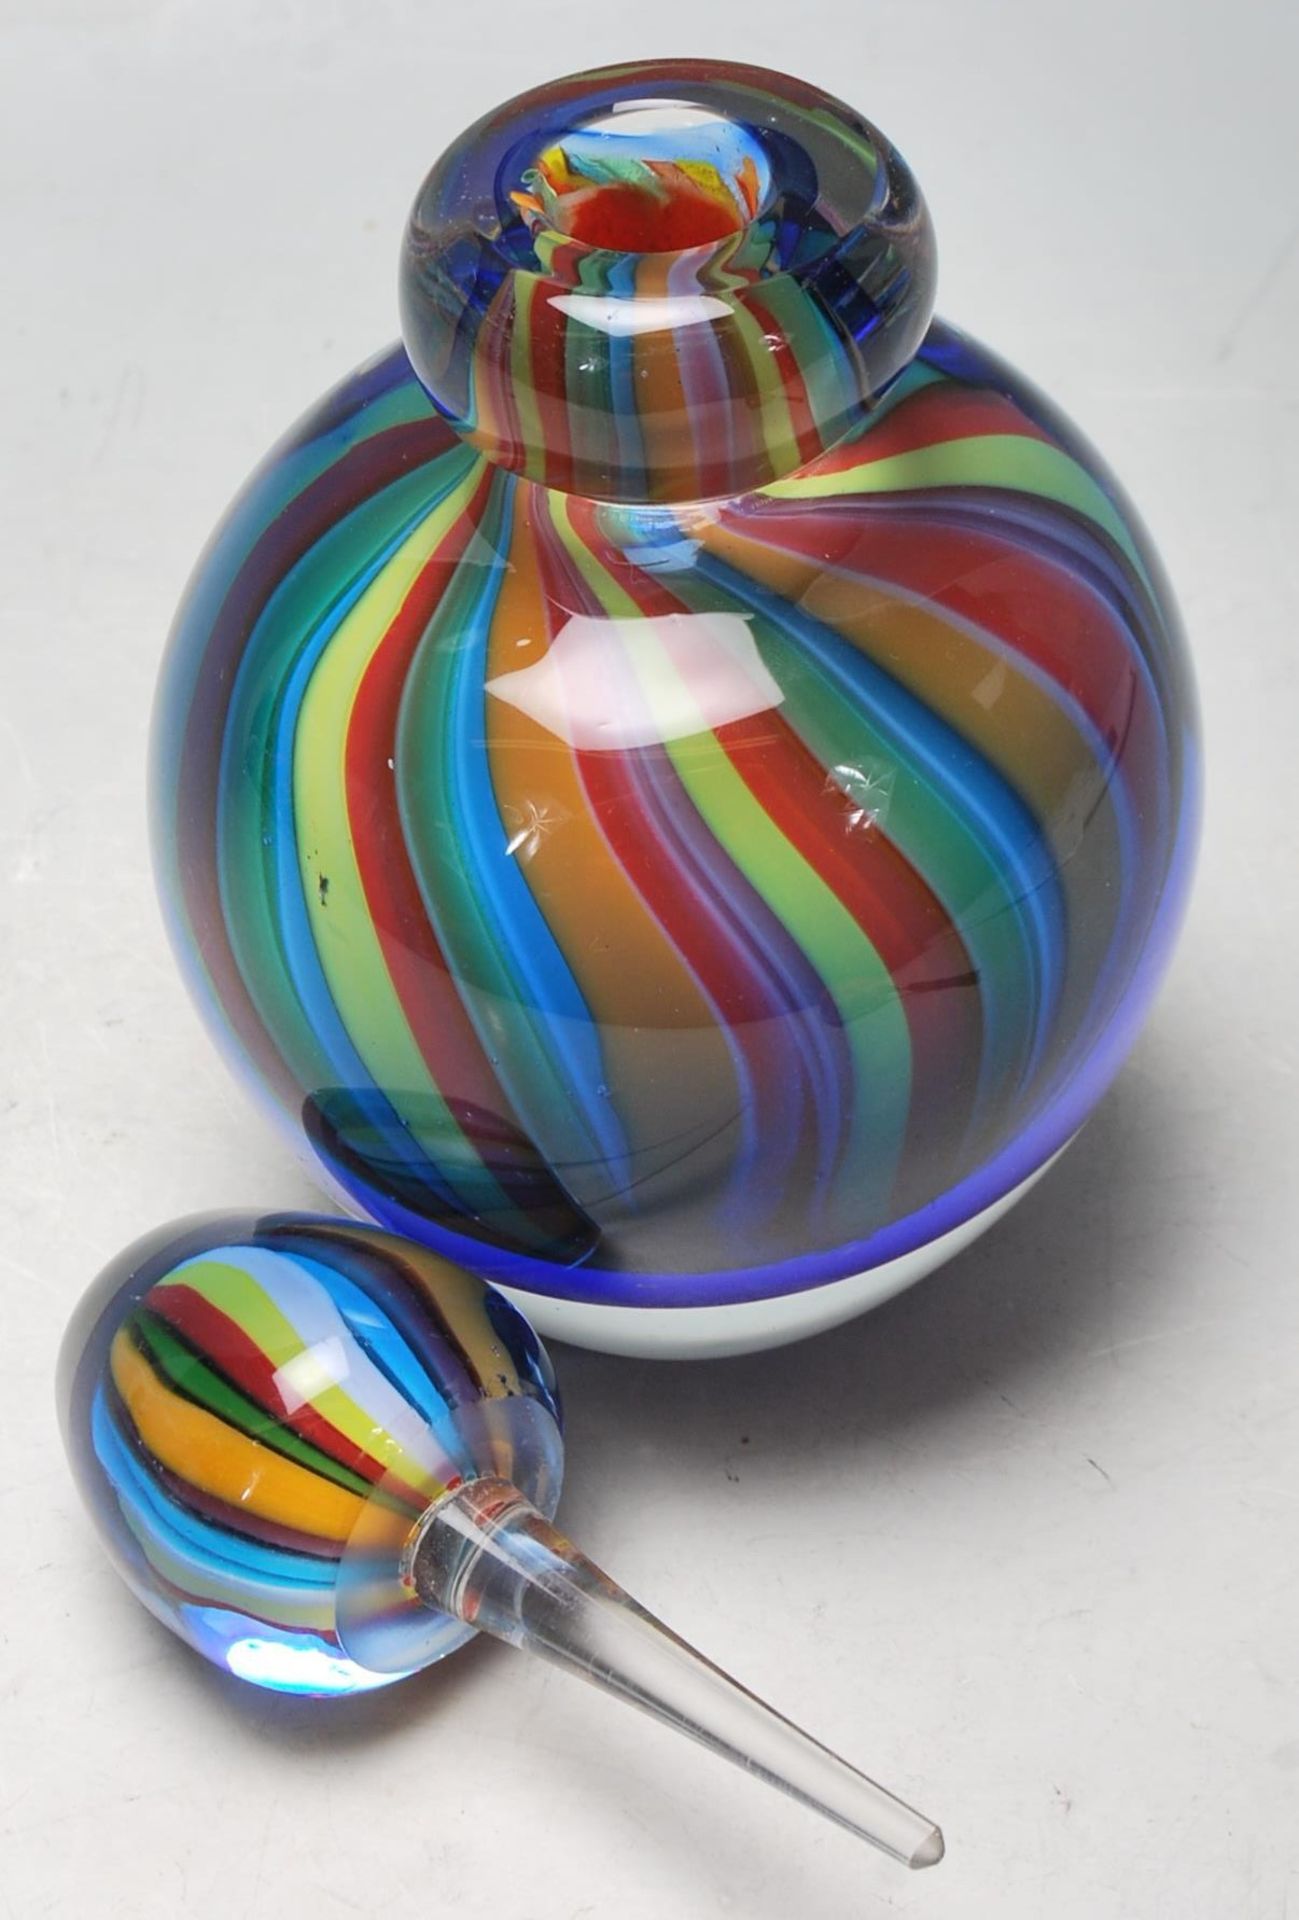 MURANO STUDIO ART GLASS PERFUME BOTTLE WITH MULTICOLOURED TWISTED DESIGN DECORATION - Image 5 of 5